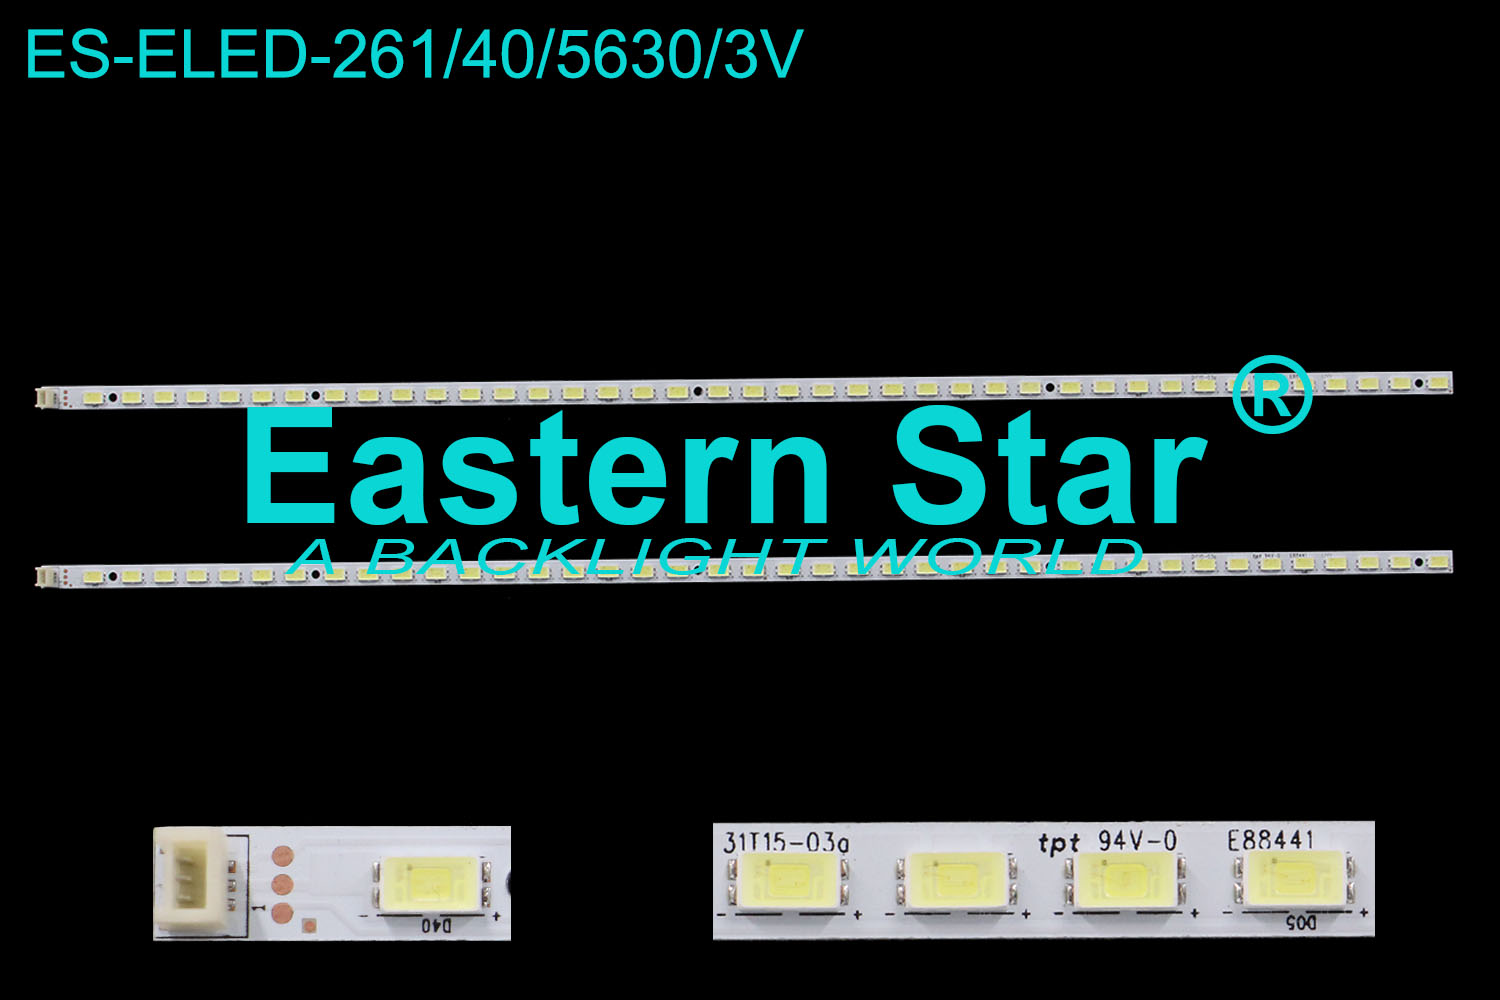 ES-ELED-261 ELED/EDGE TV backlight 32'' 40LEDs use for TOSHIBA HAIER 31T15-03a 73.31T14.004-6-SK1 LED STRIPS(2)